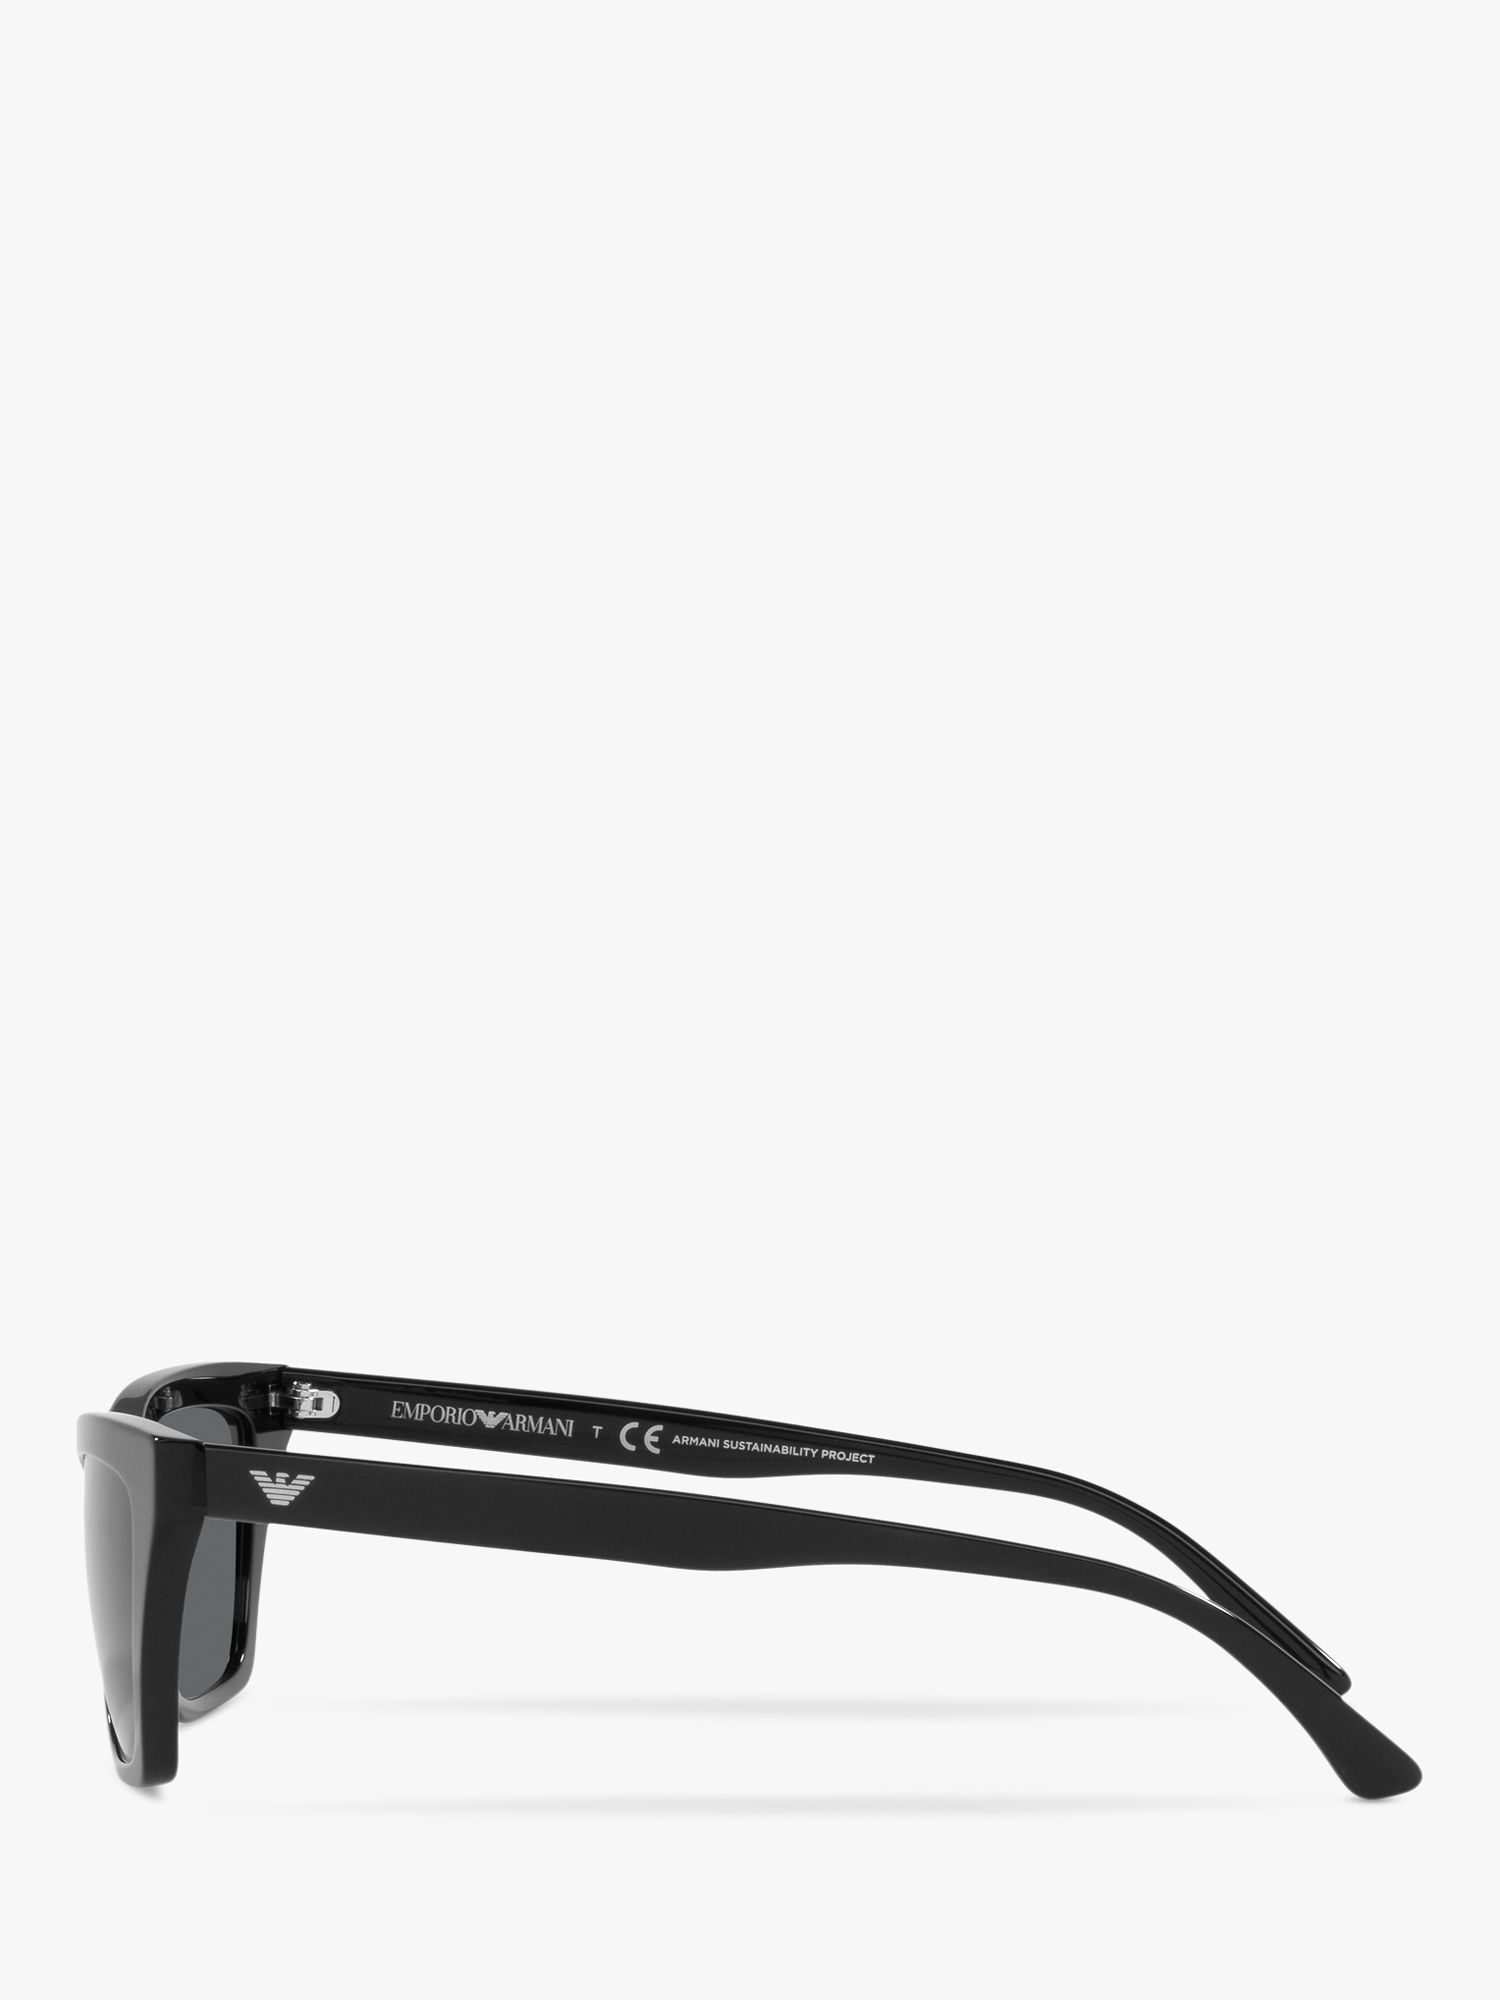 Emporio Armani EA4169 Women's Cat's Eye Sunglasses, Black/Grey